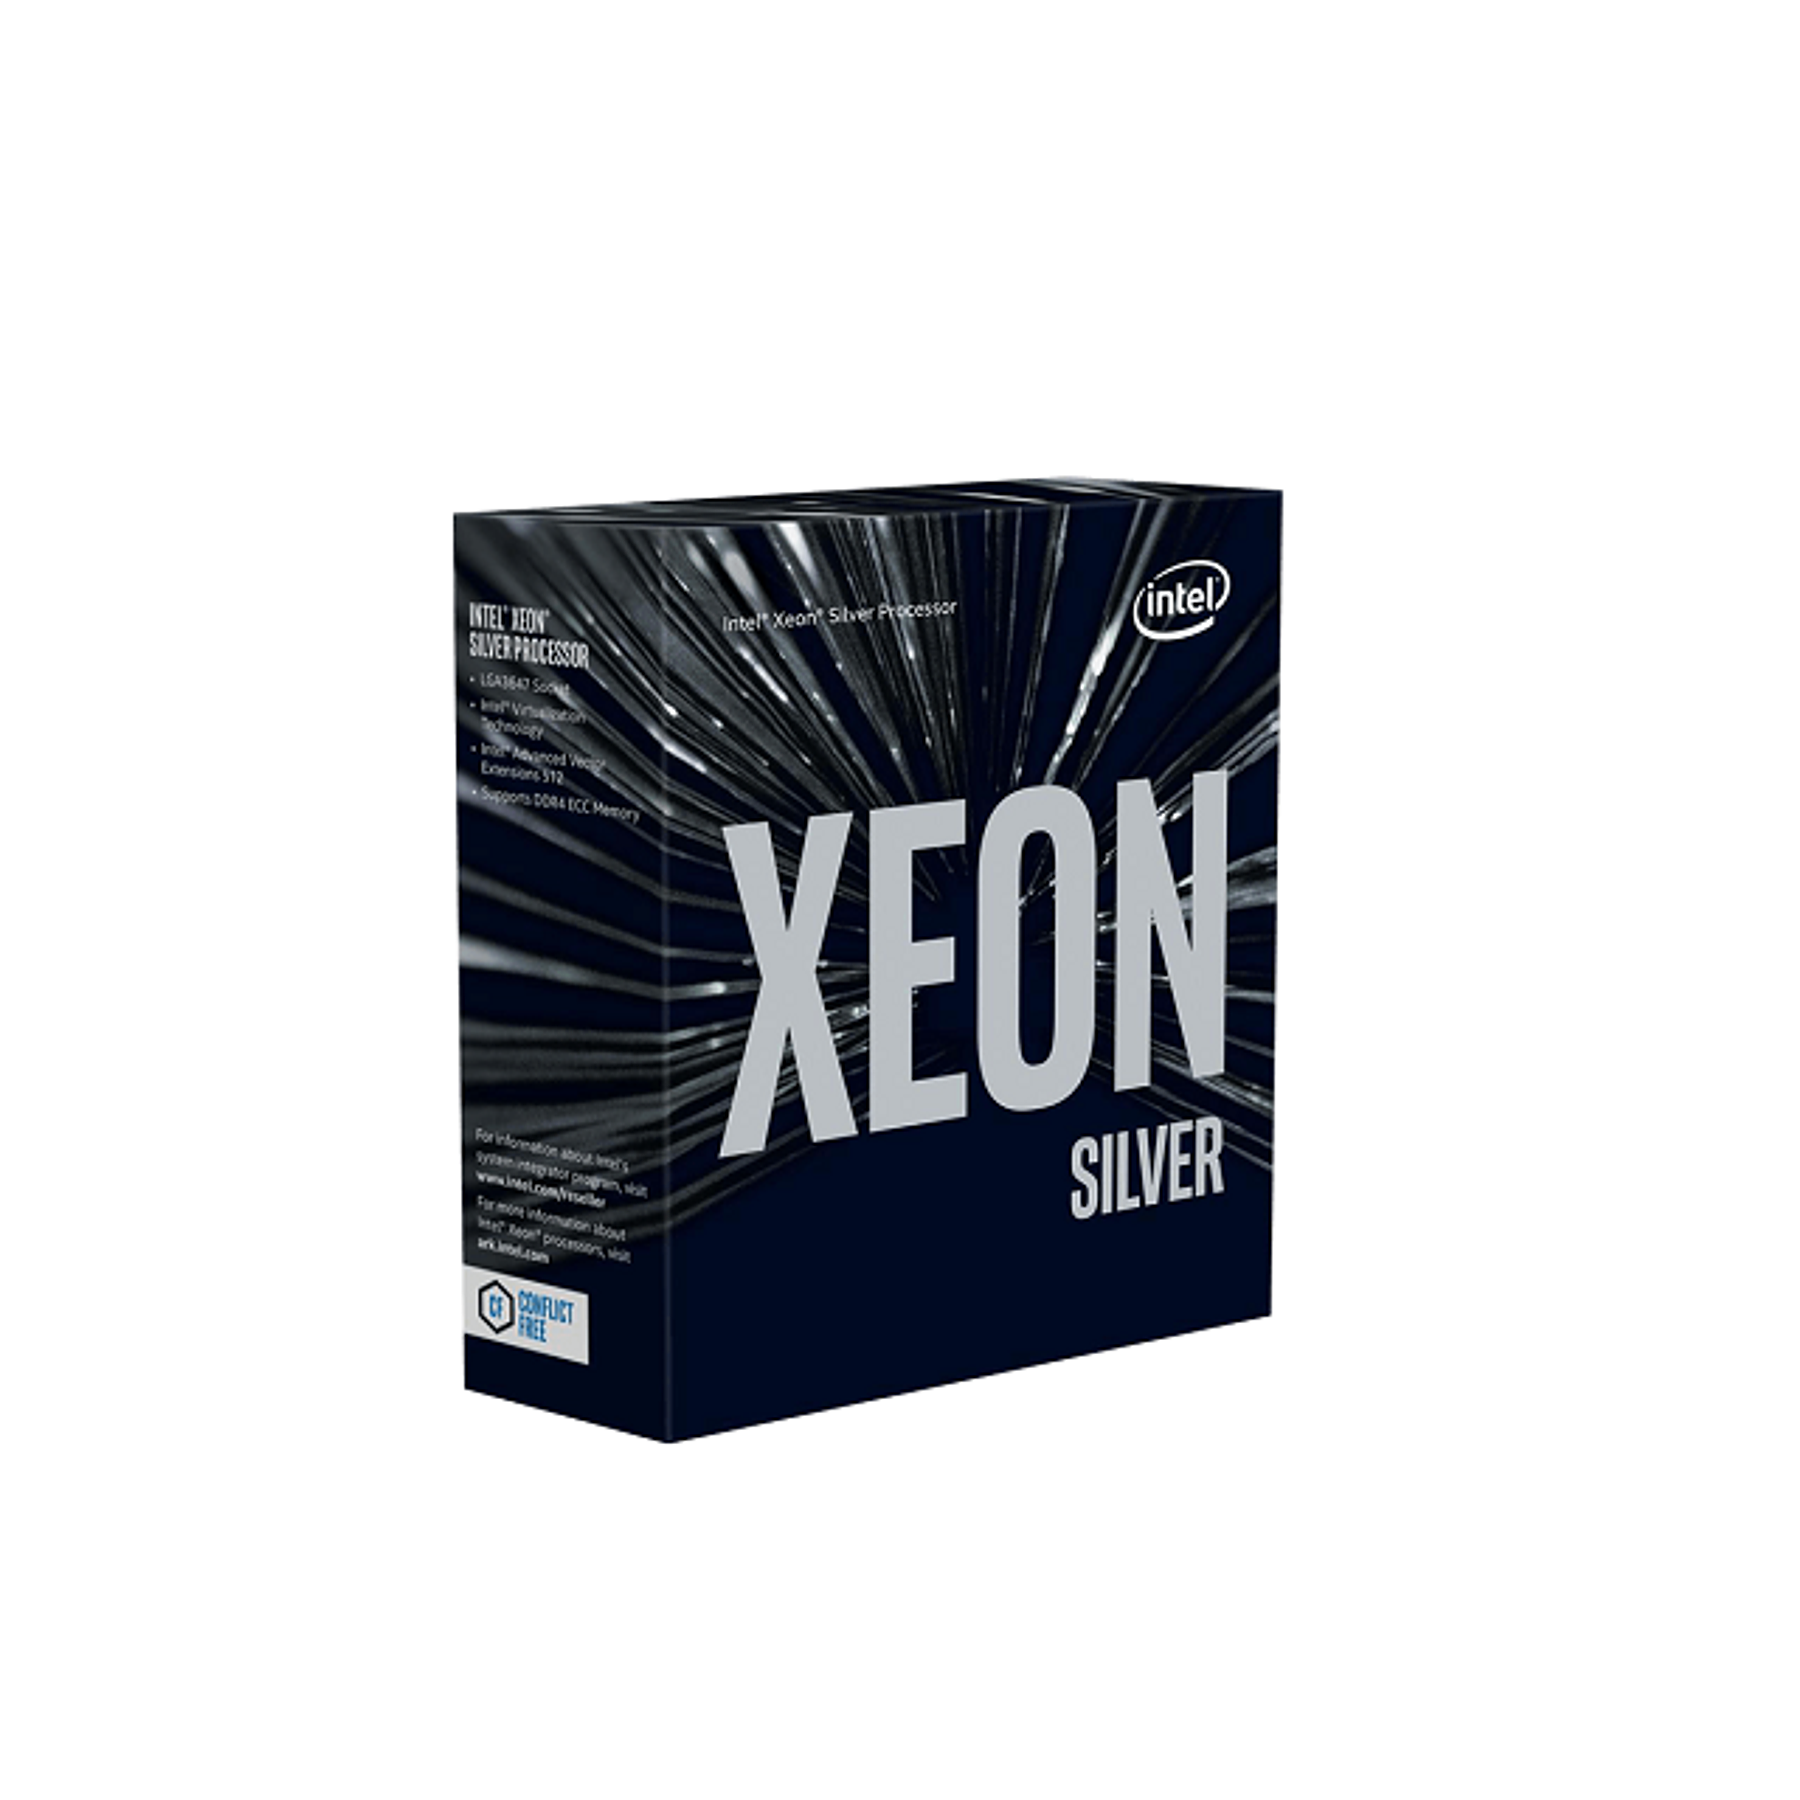 Intel Xeon Silver 4208 Procesador 2.1 GHz 8 núcleos 16 hilos 11 MB Caché 